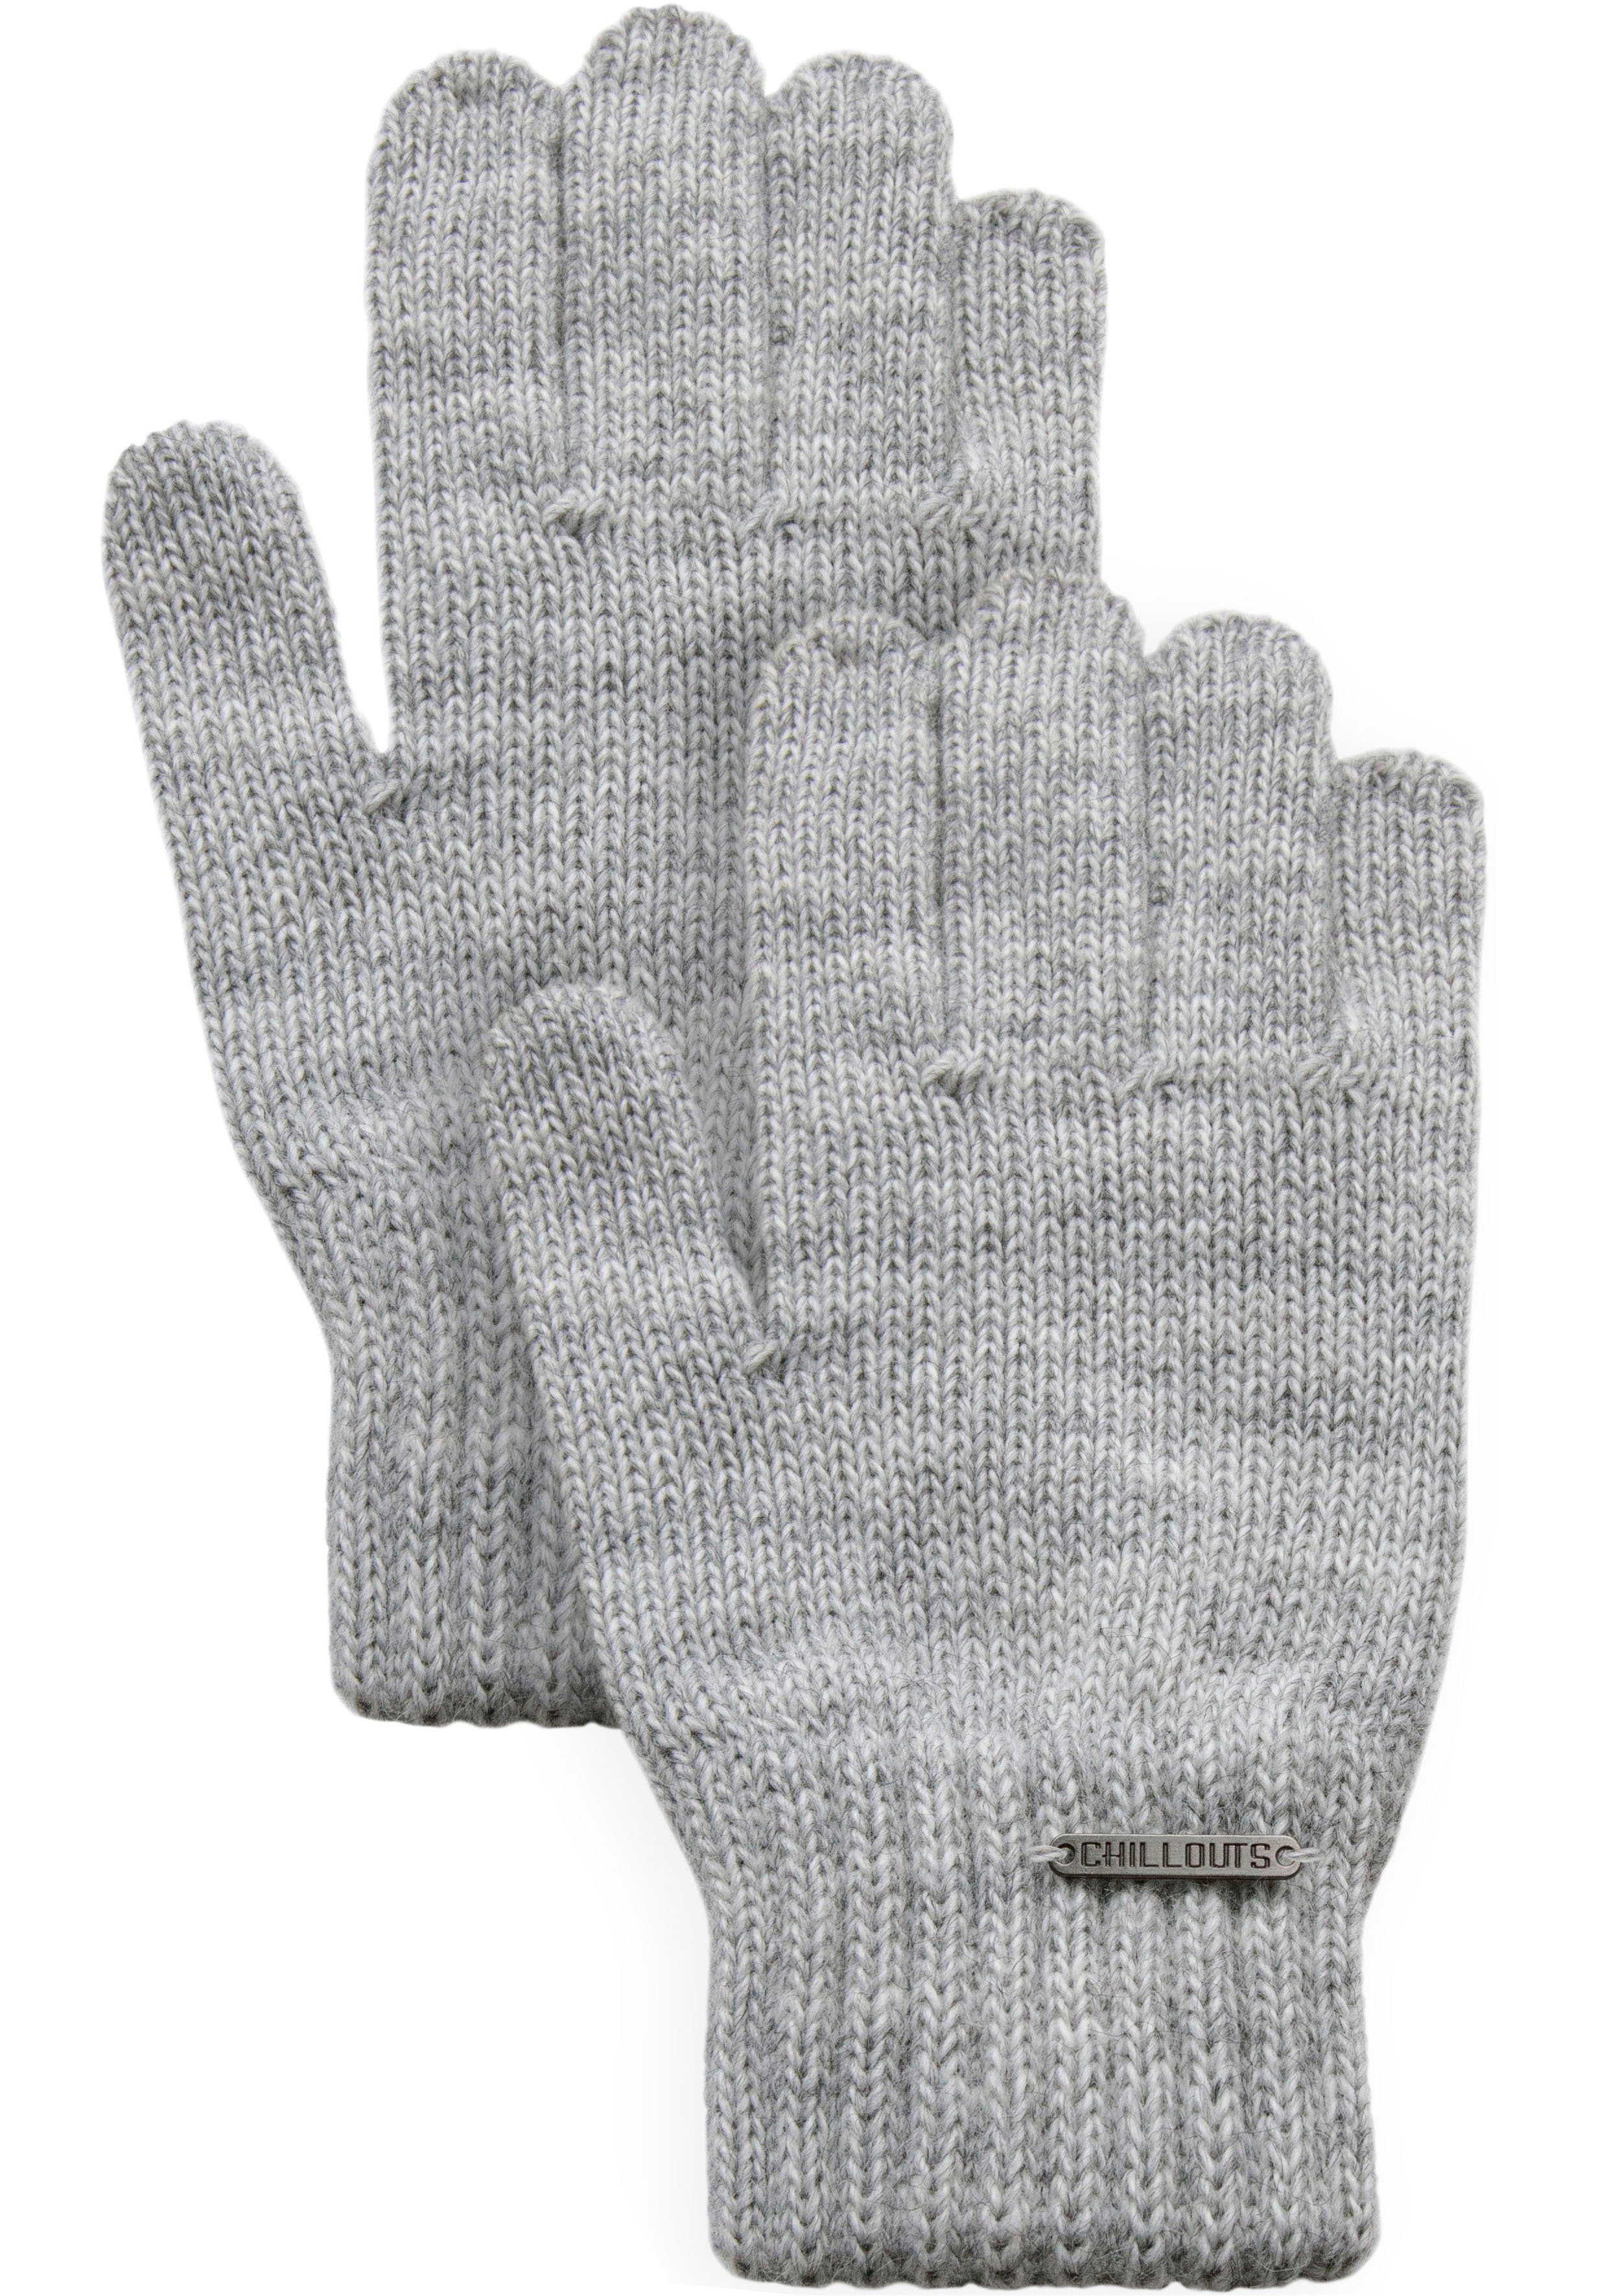 Jamila melange grey gestrickt Strickhandschuhe light Fingerhandschuhe, Glove chillouts